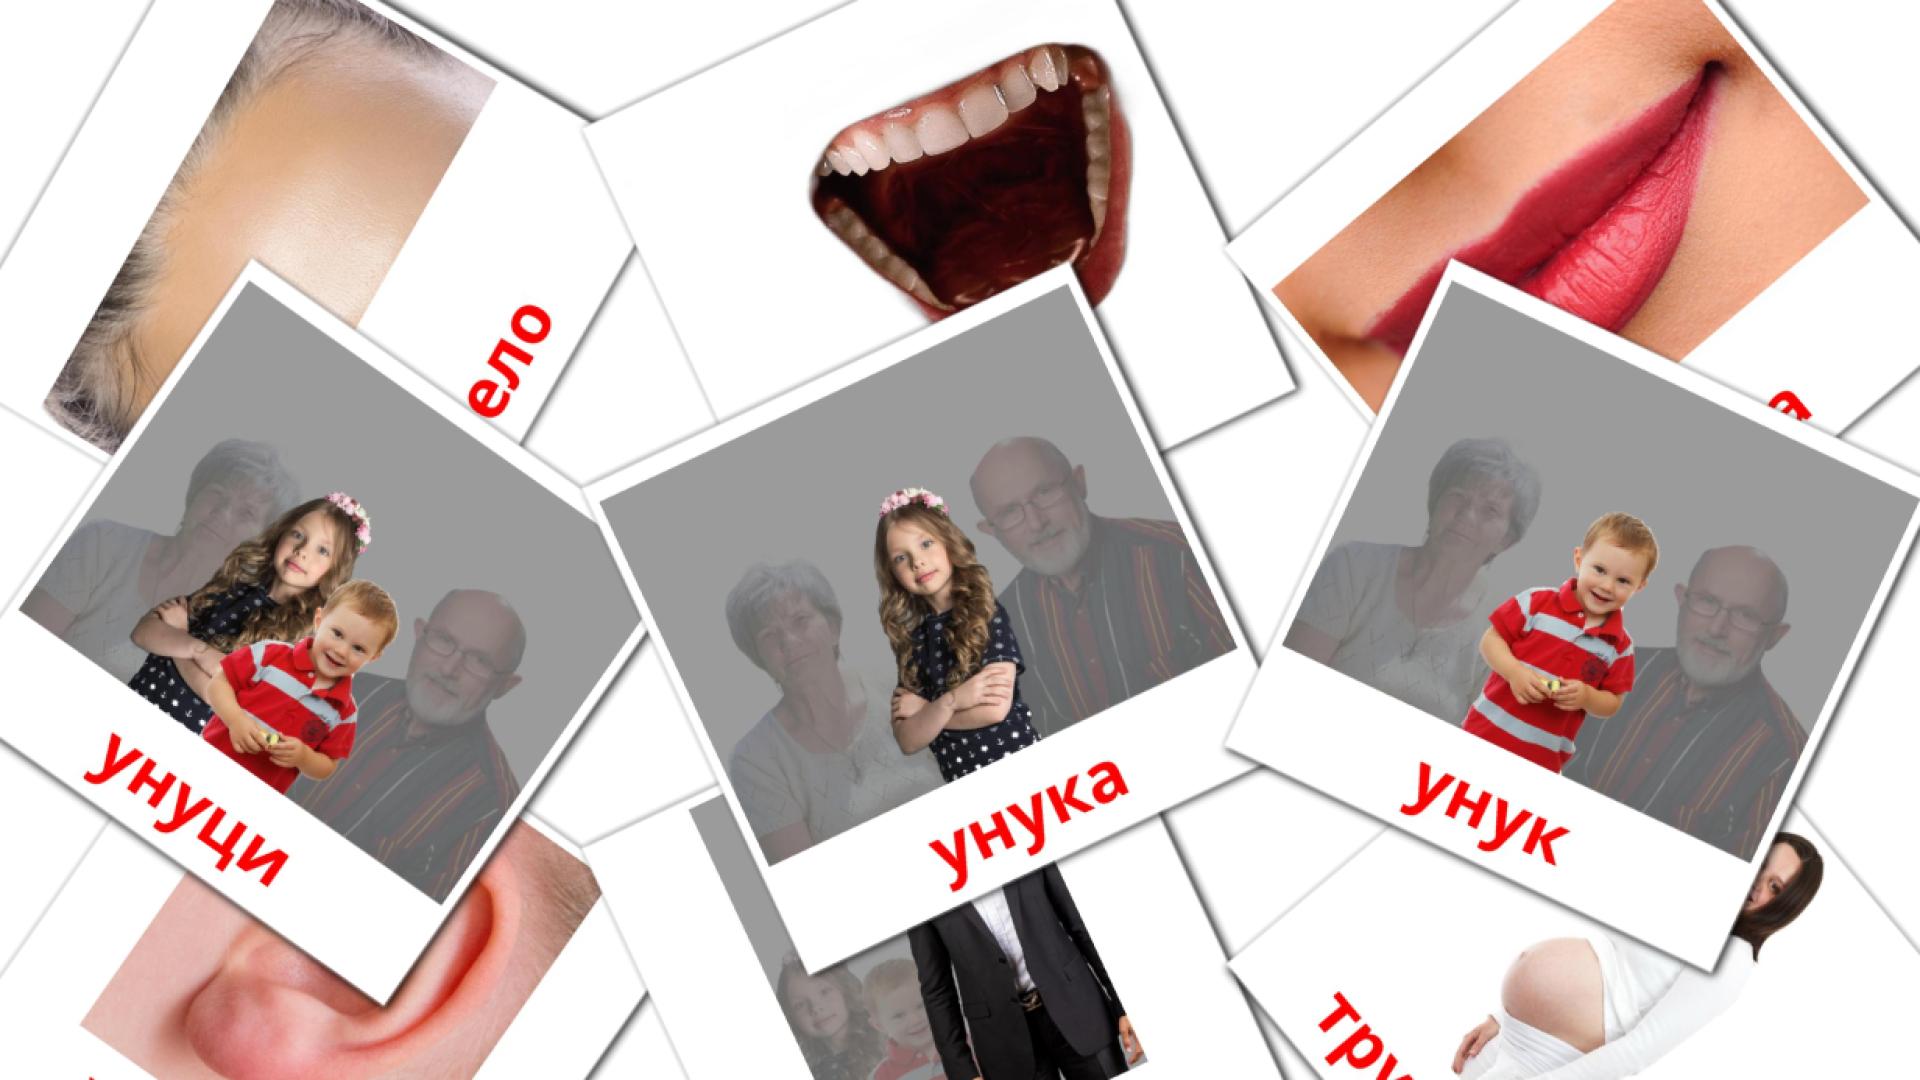 Људи serbian(cyrillic) vocabulary flashcards